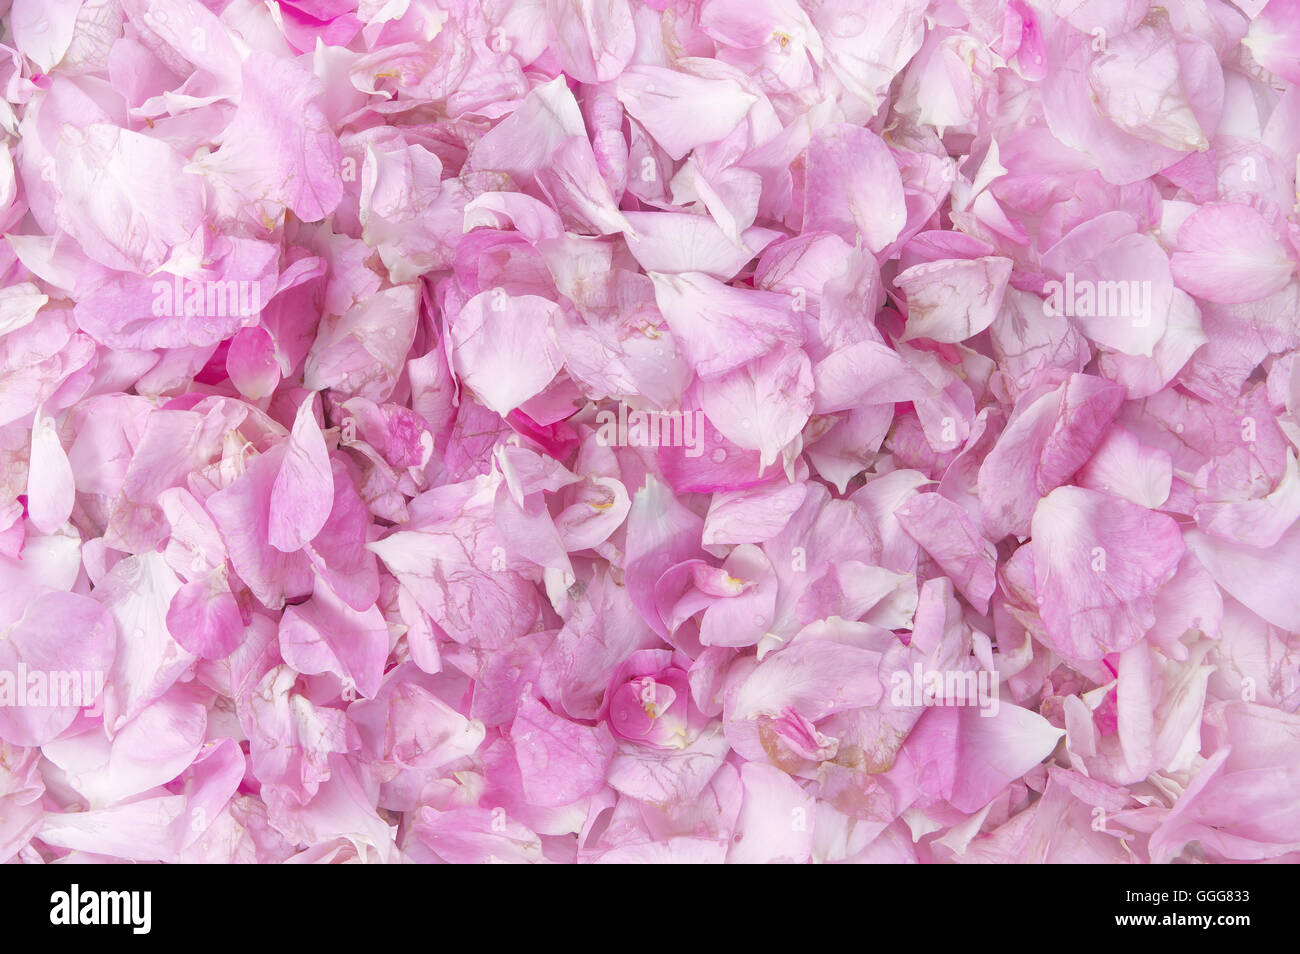 Petals of a pink rose texture. Element of design Stock Photo